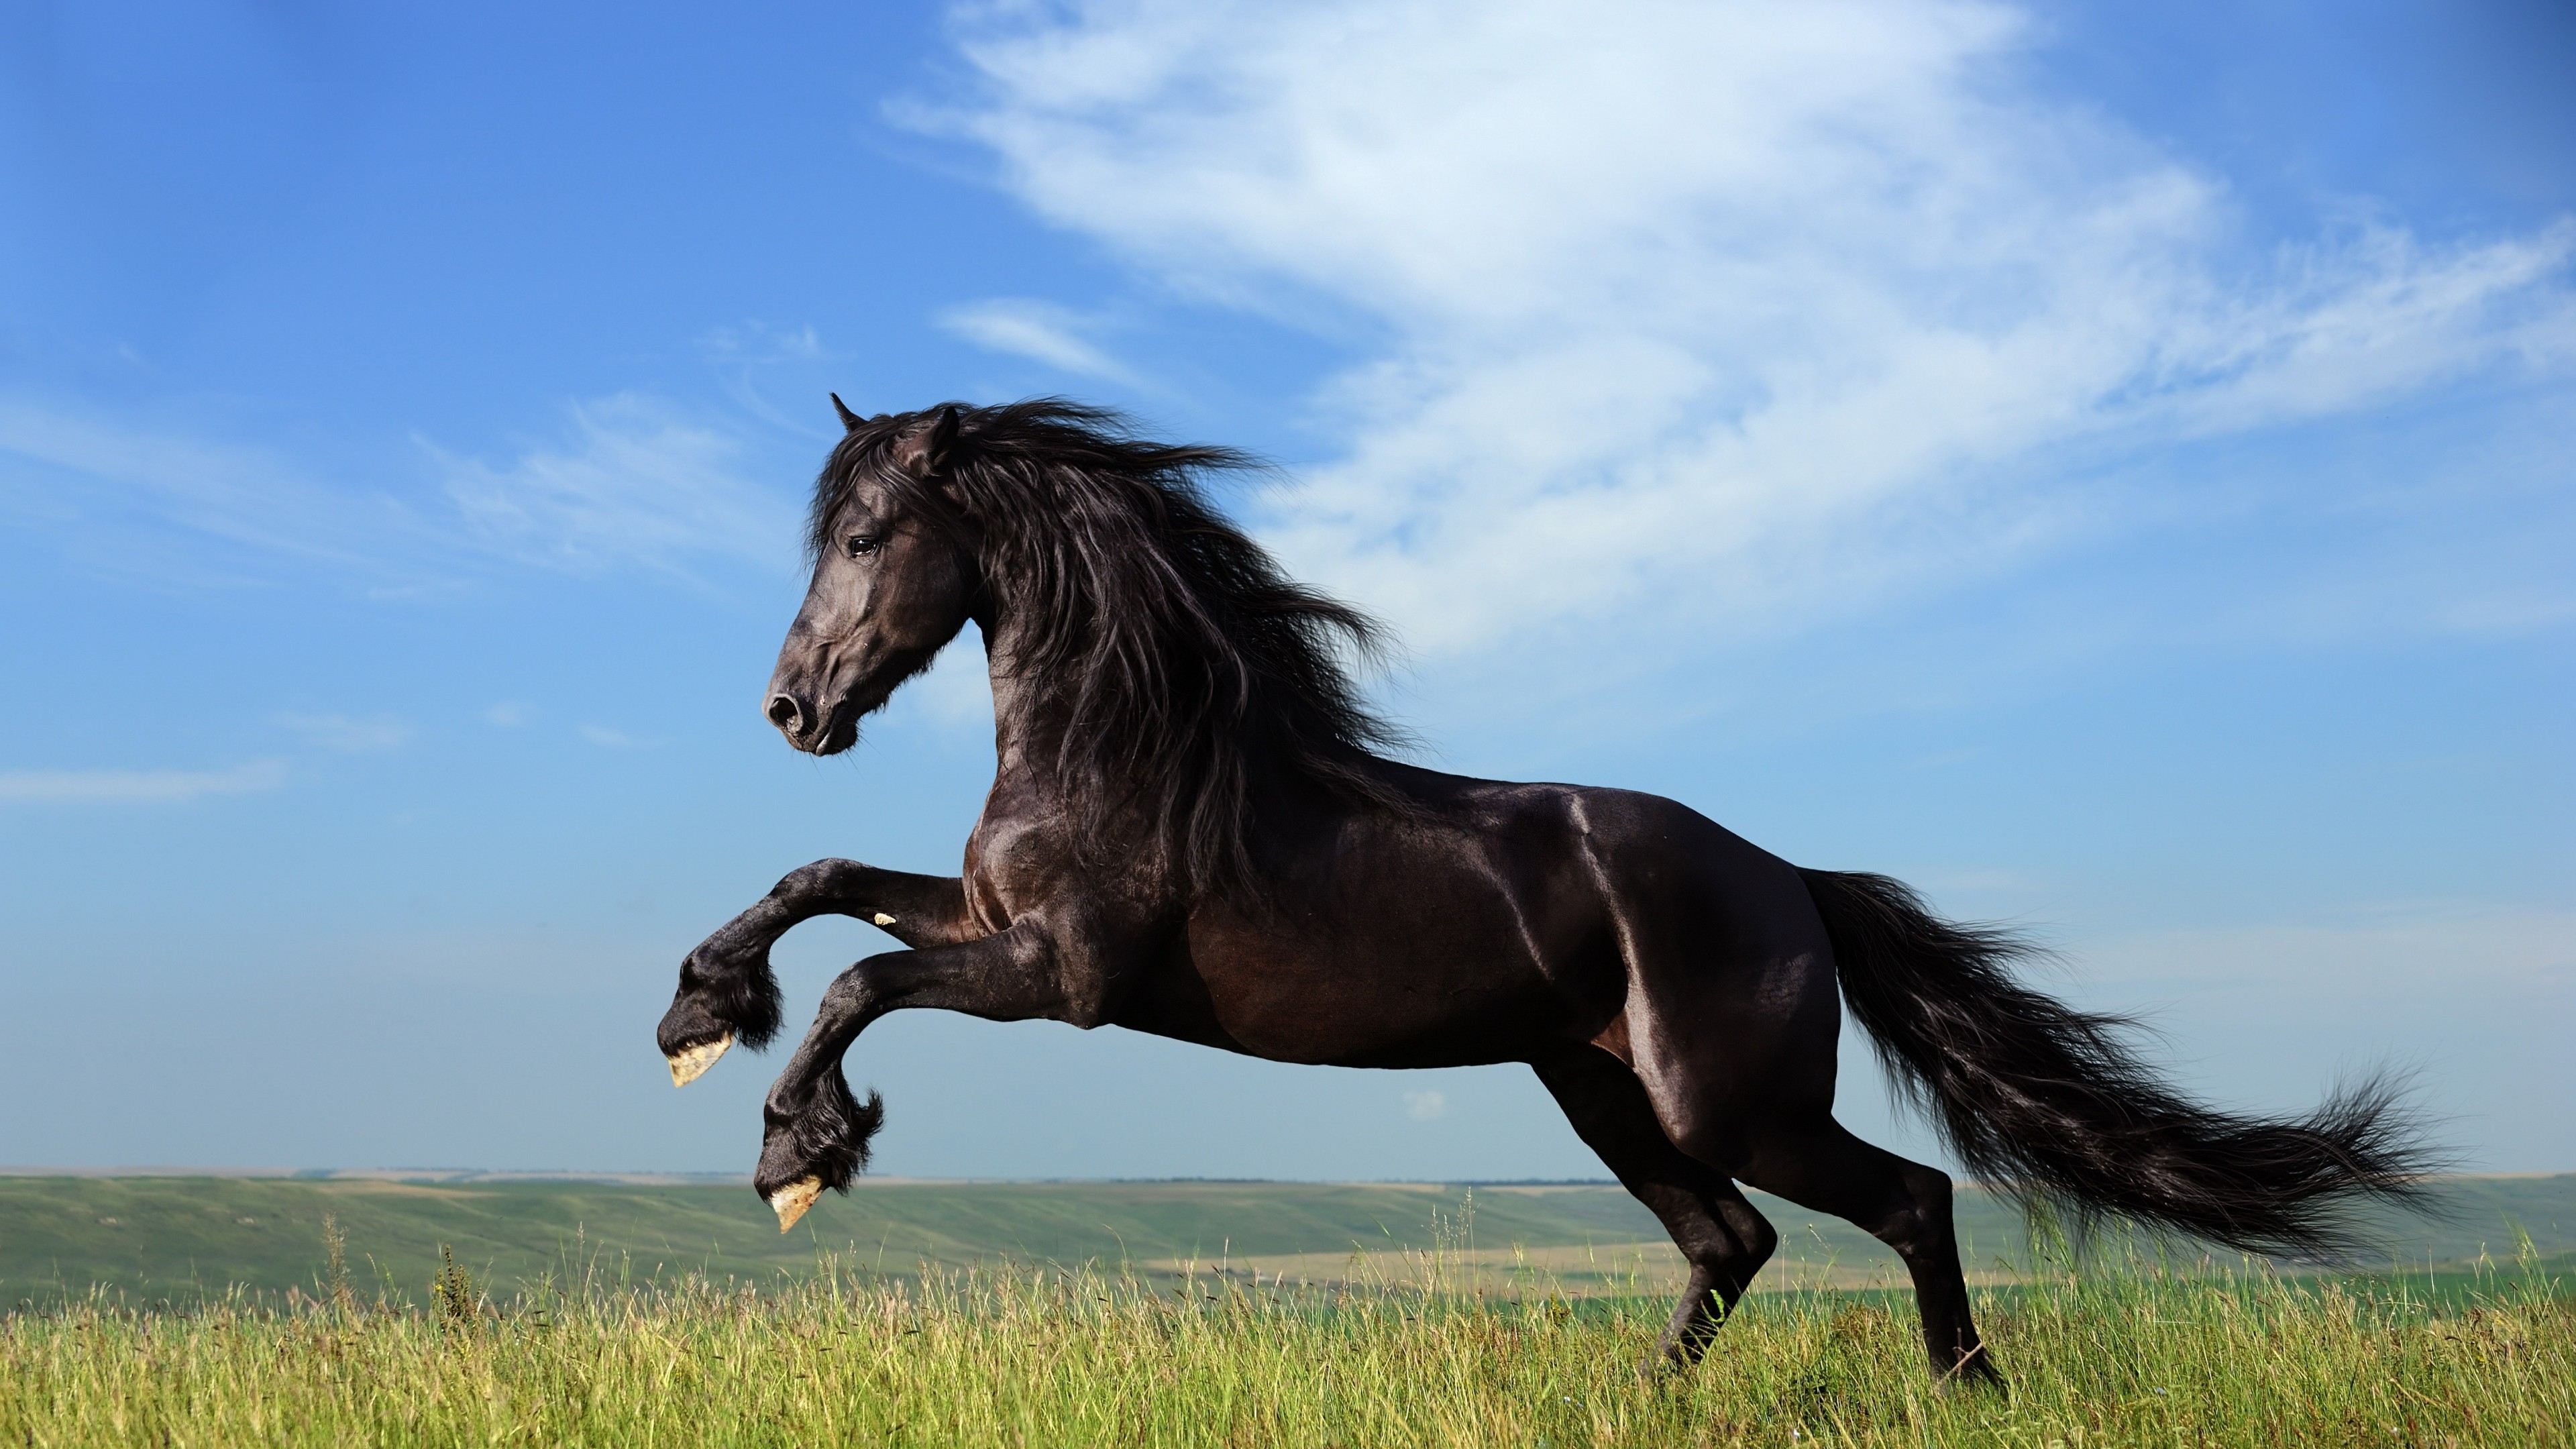 jump-black-horse-animals.jpeg?route=thumb&h=350